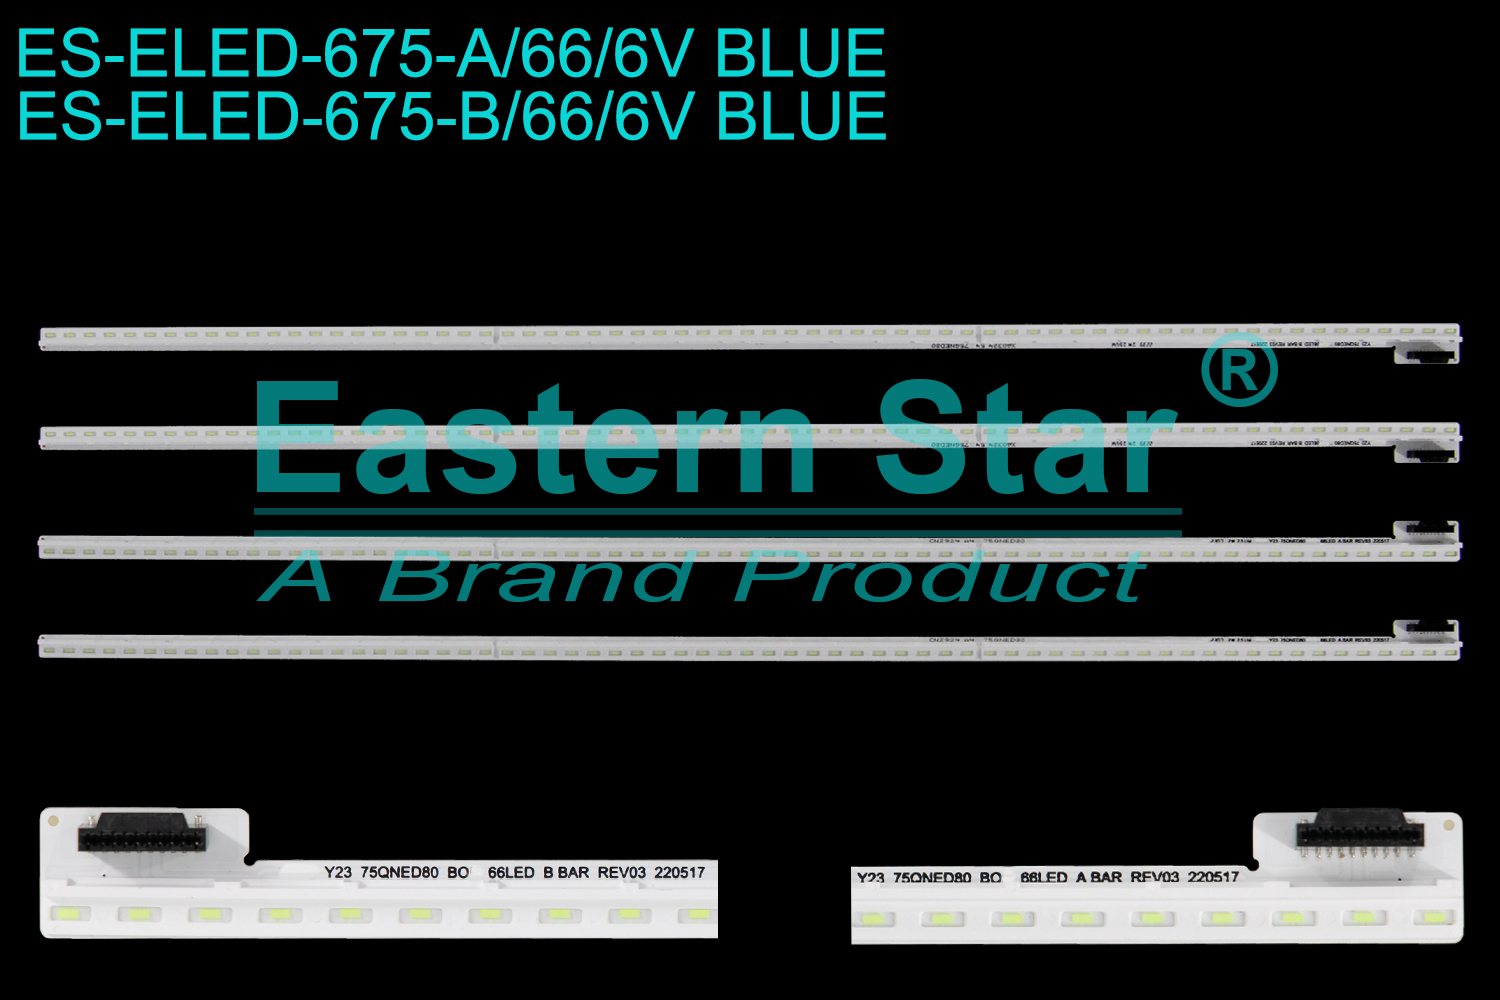 ES-ELED-675 ELED/EDGE TV backlight use for 75'' Lg  A:Y23_75QNED80_66LED_A BAR_REV03_220517 2307 2W 25UM CN2924 A4 75QNED80 B:Y23_75QNED80_66LED_B BAR_REV03_220517 2239 2W 25UM XA0324 54 75QNED80 LED STRIPS(4)